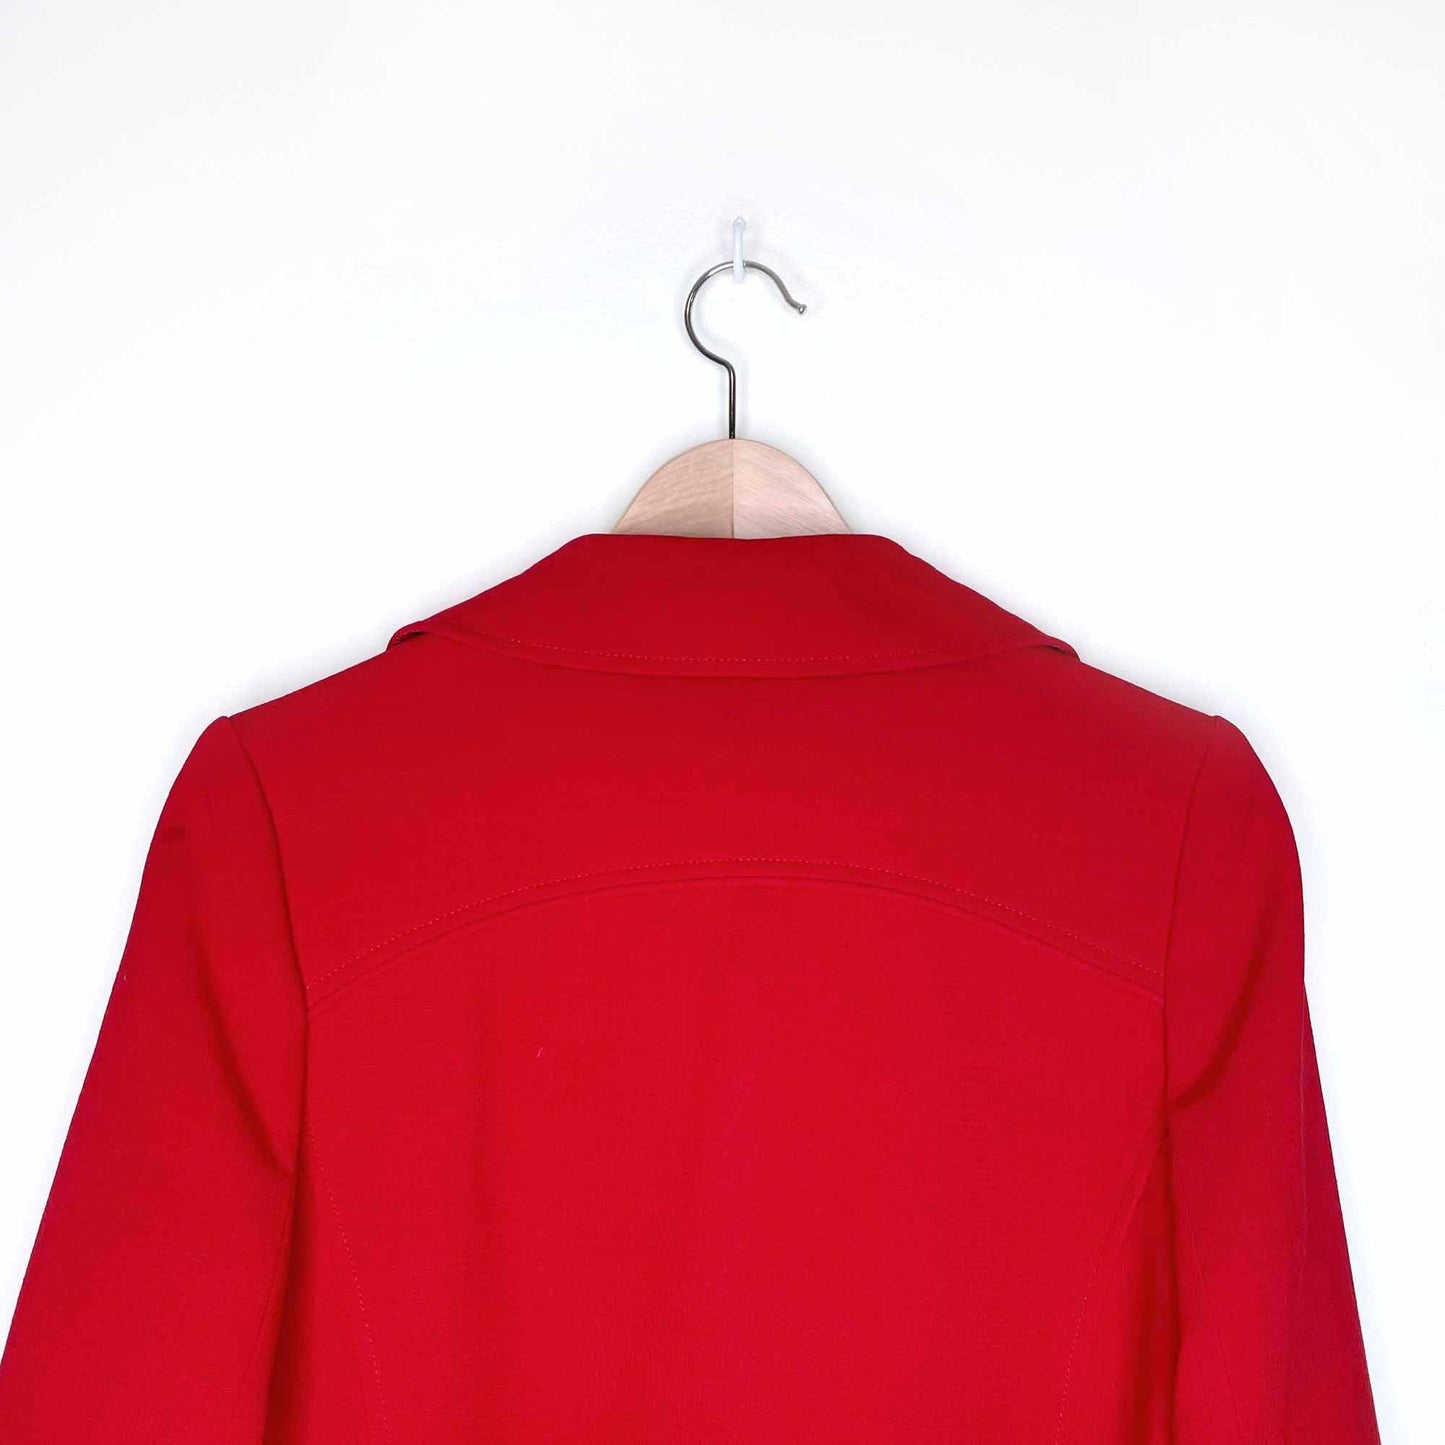 pink tartan 100% wool red jacket with mesh lining - size 4